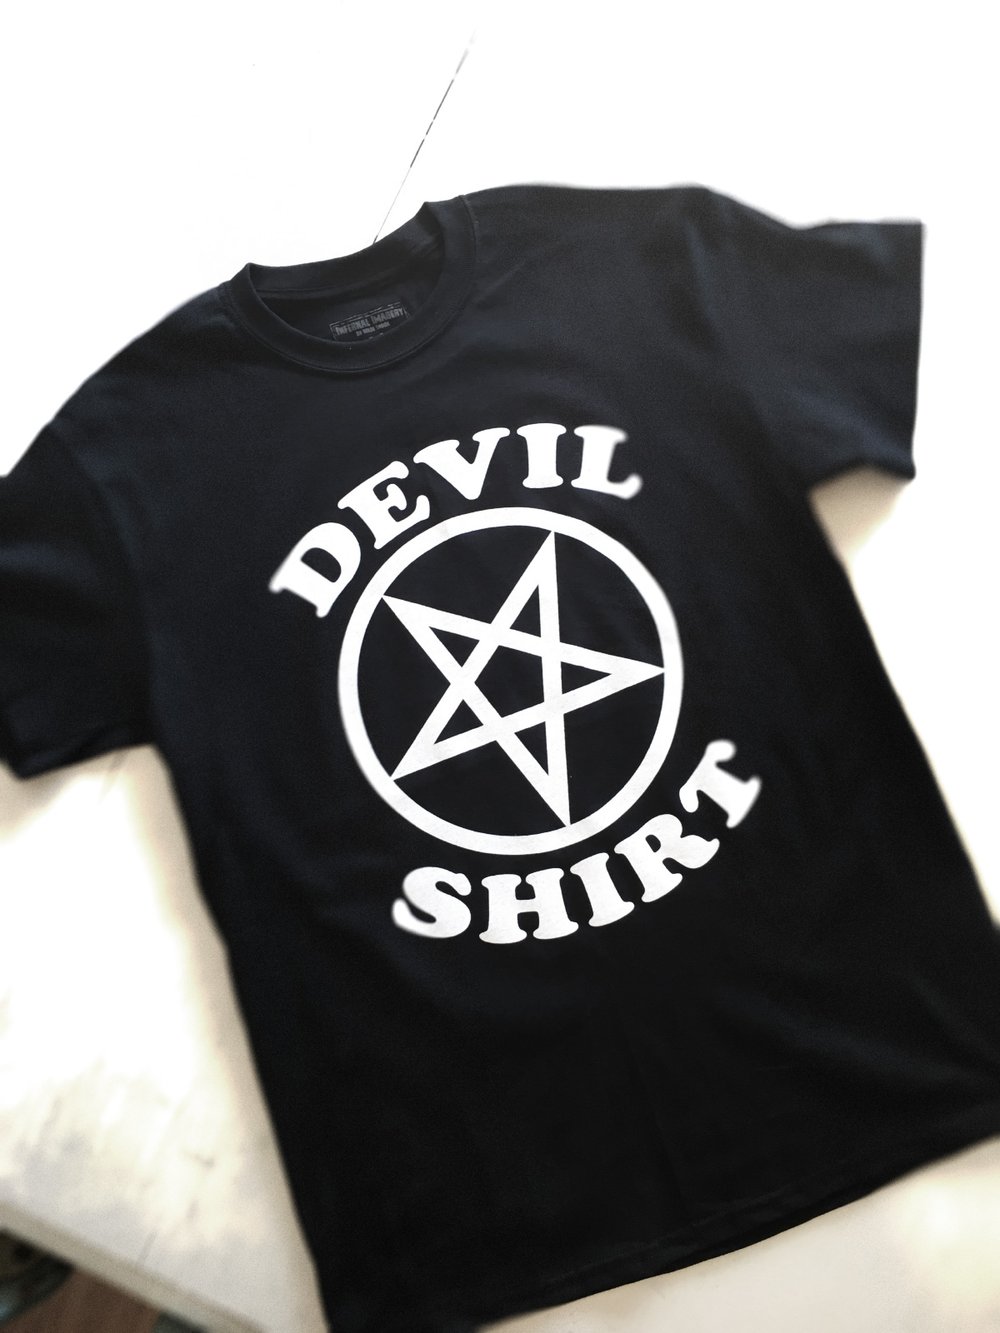 "Devil Shirt" Tee